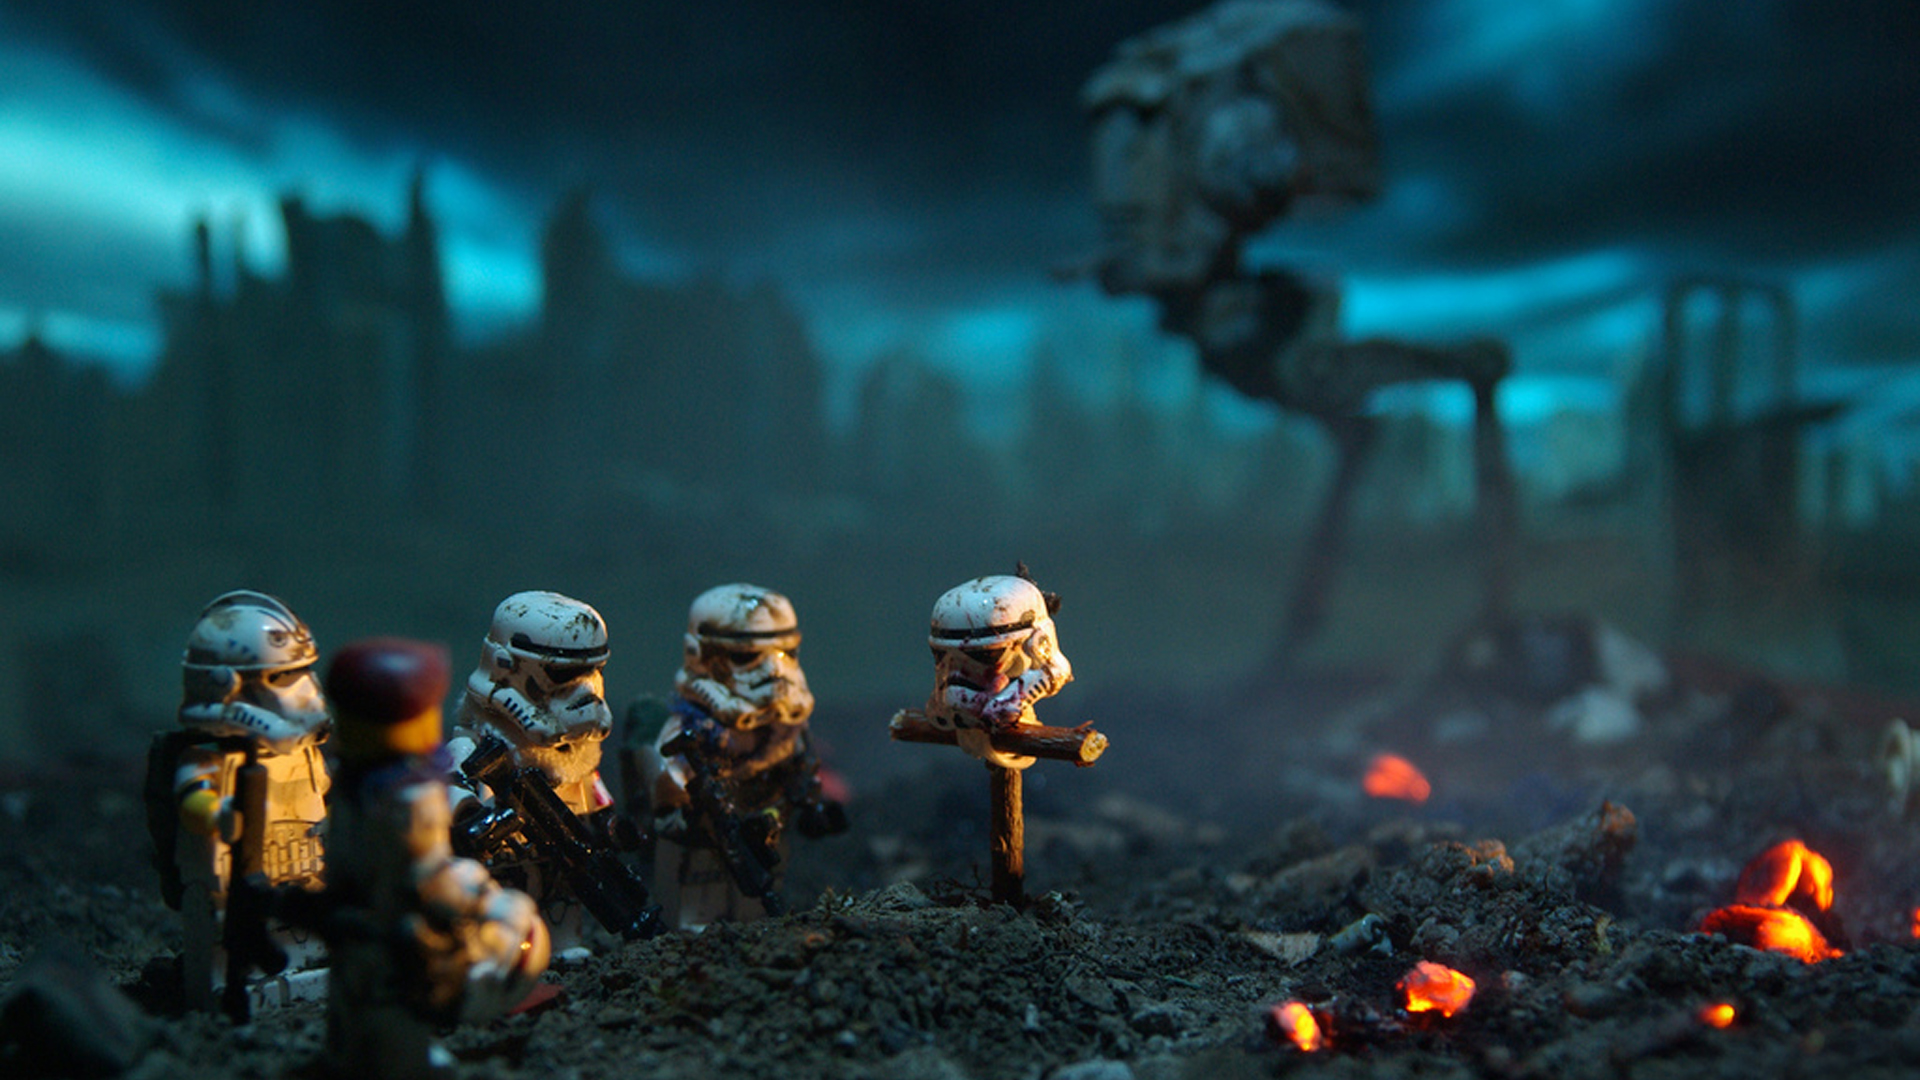 Lego Star Wars Desktop Wallpaper Stormtroopers HD Jpg